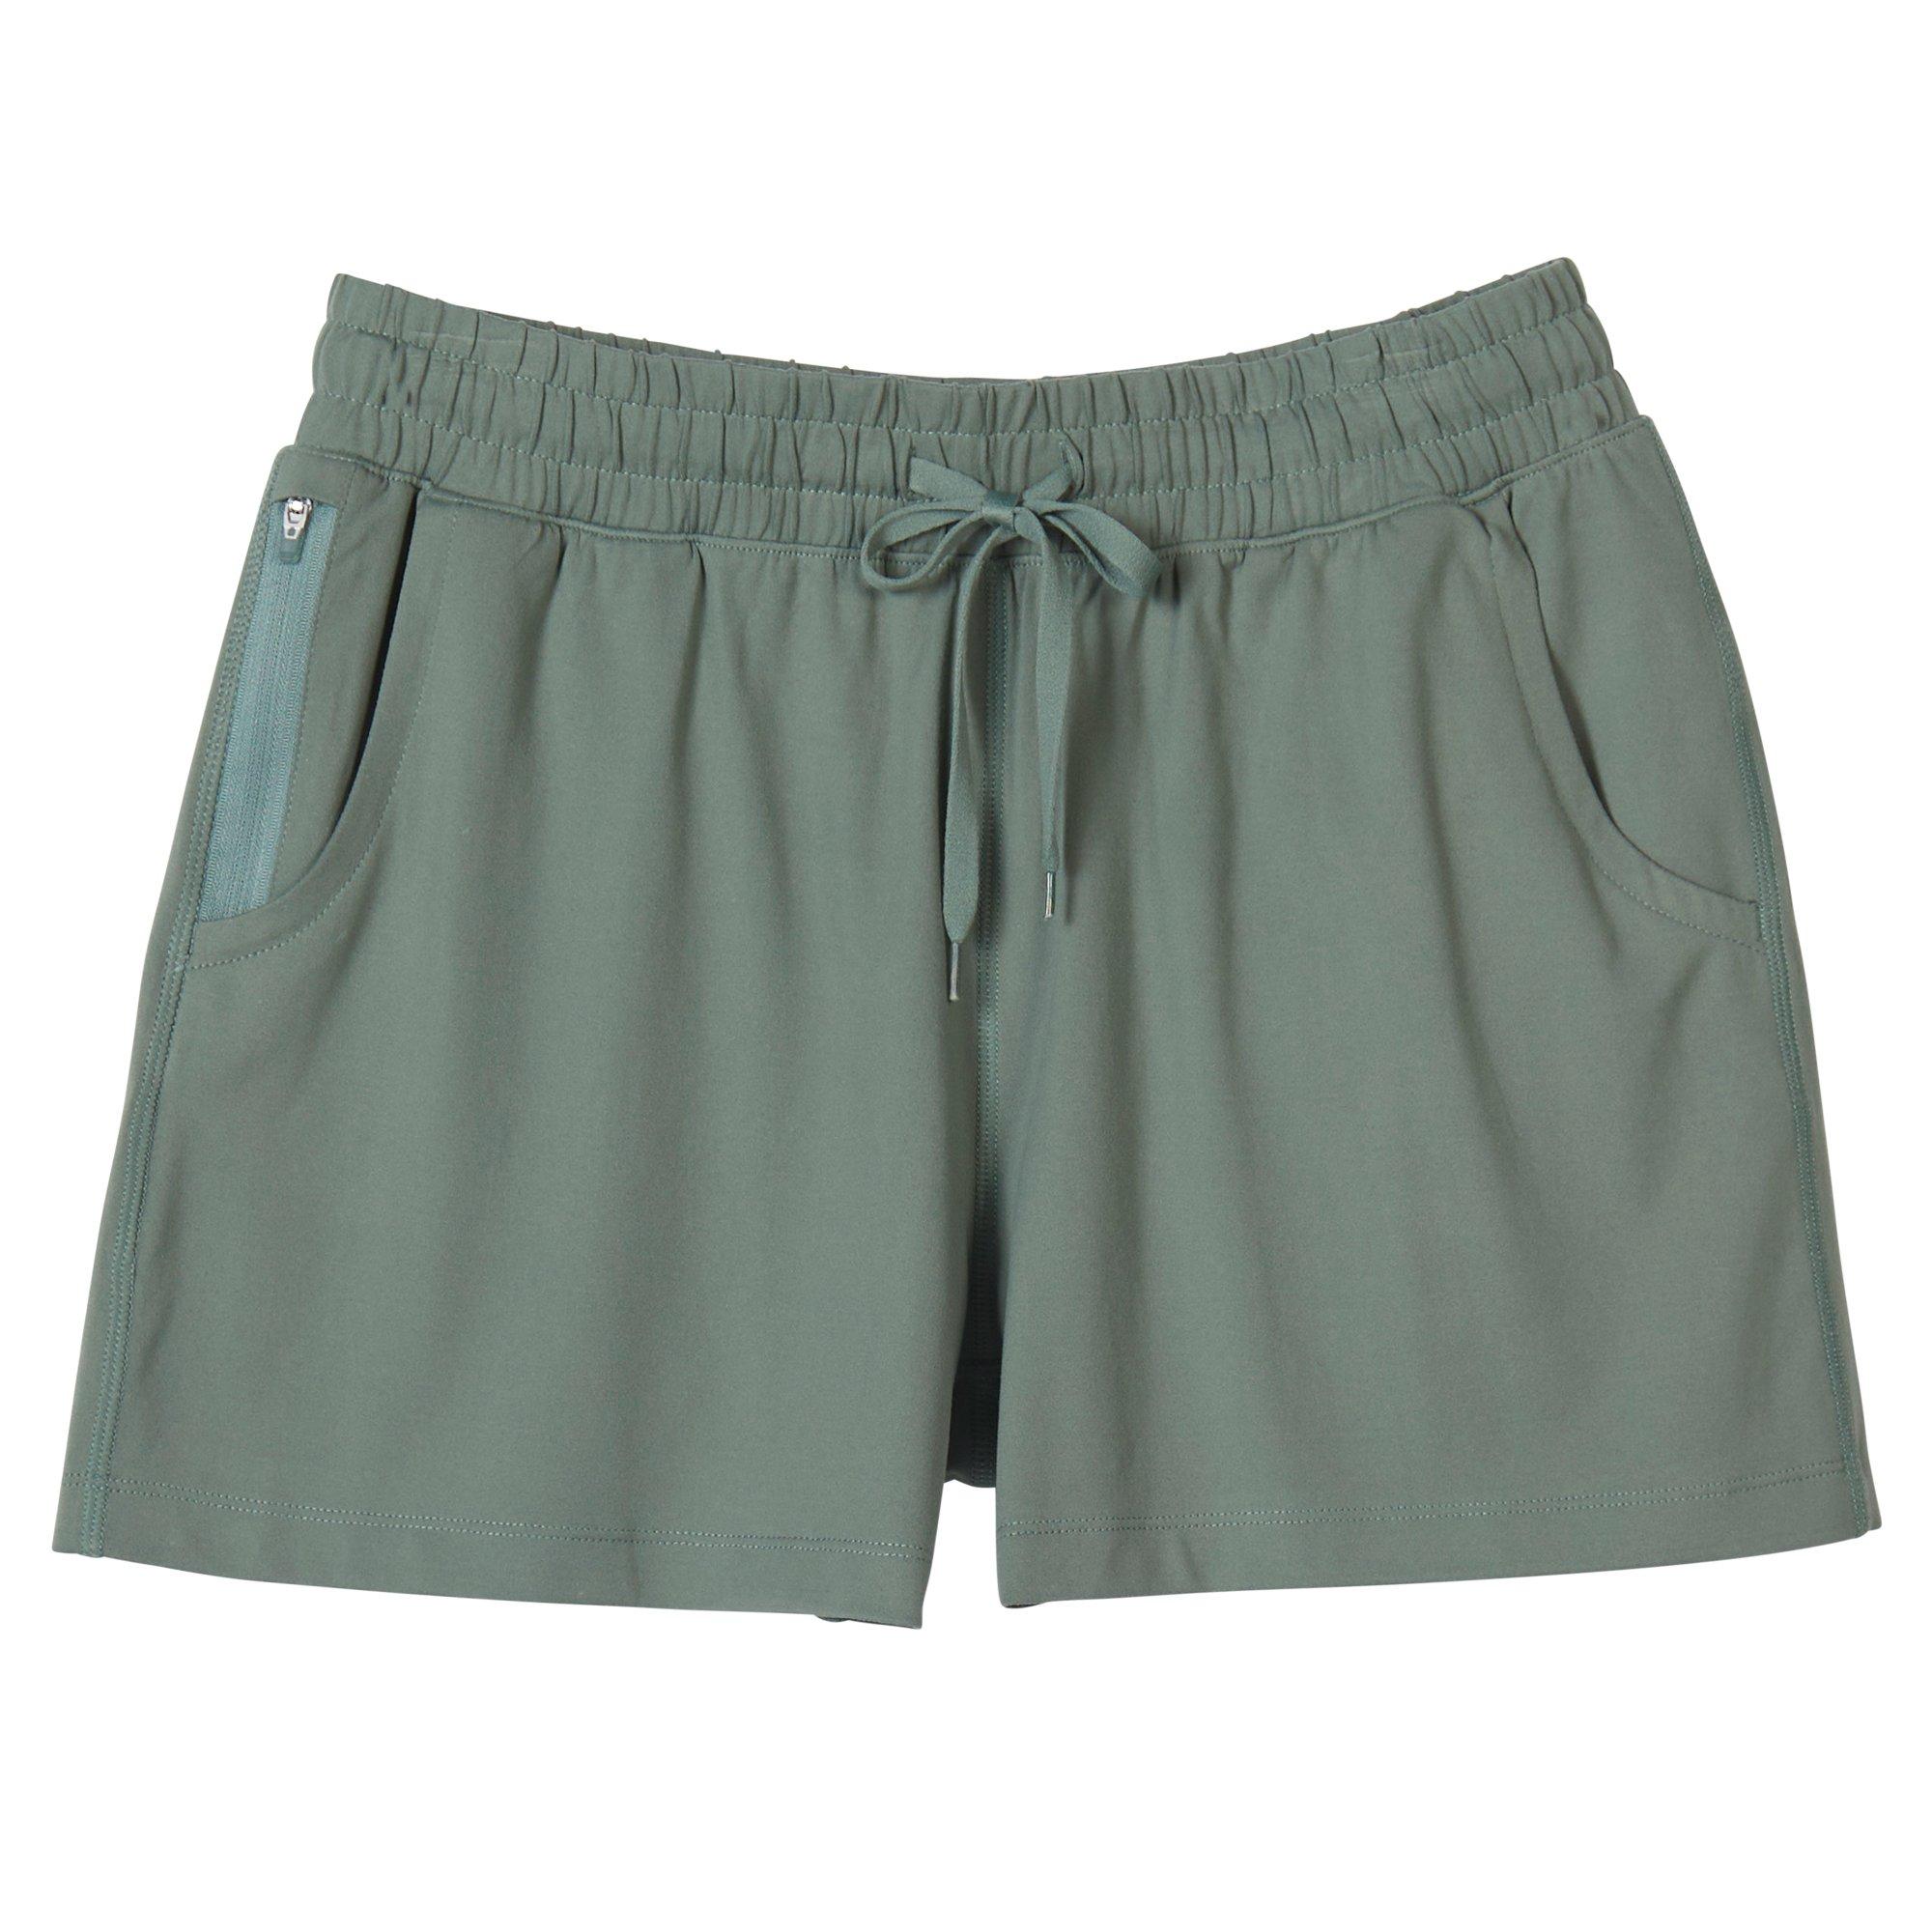 Reel Legends Green Cargo Shorts Size 42 (EU) - 15% off